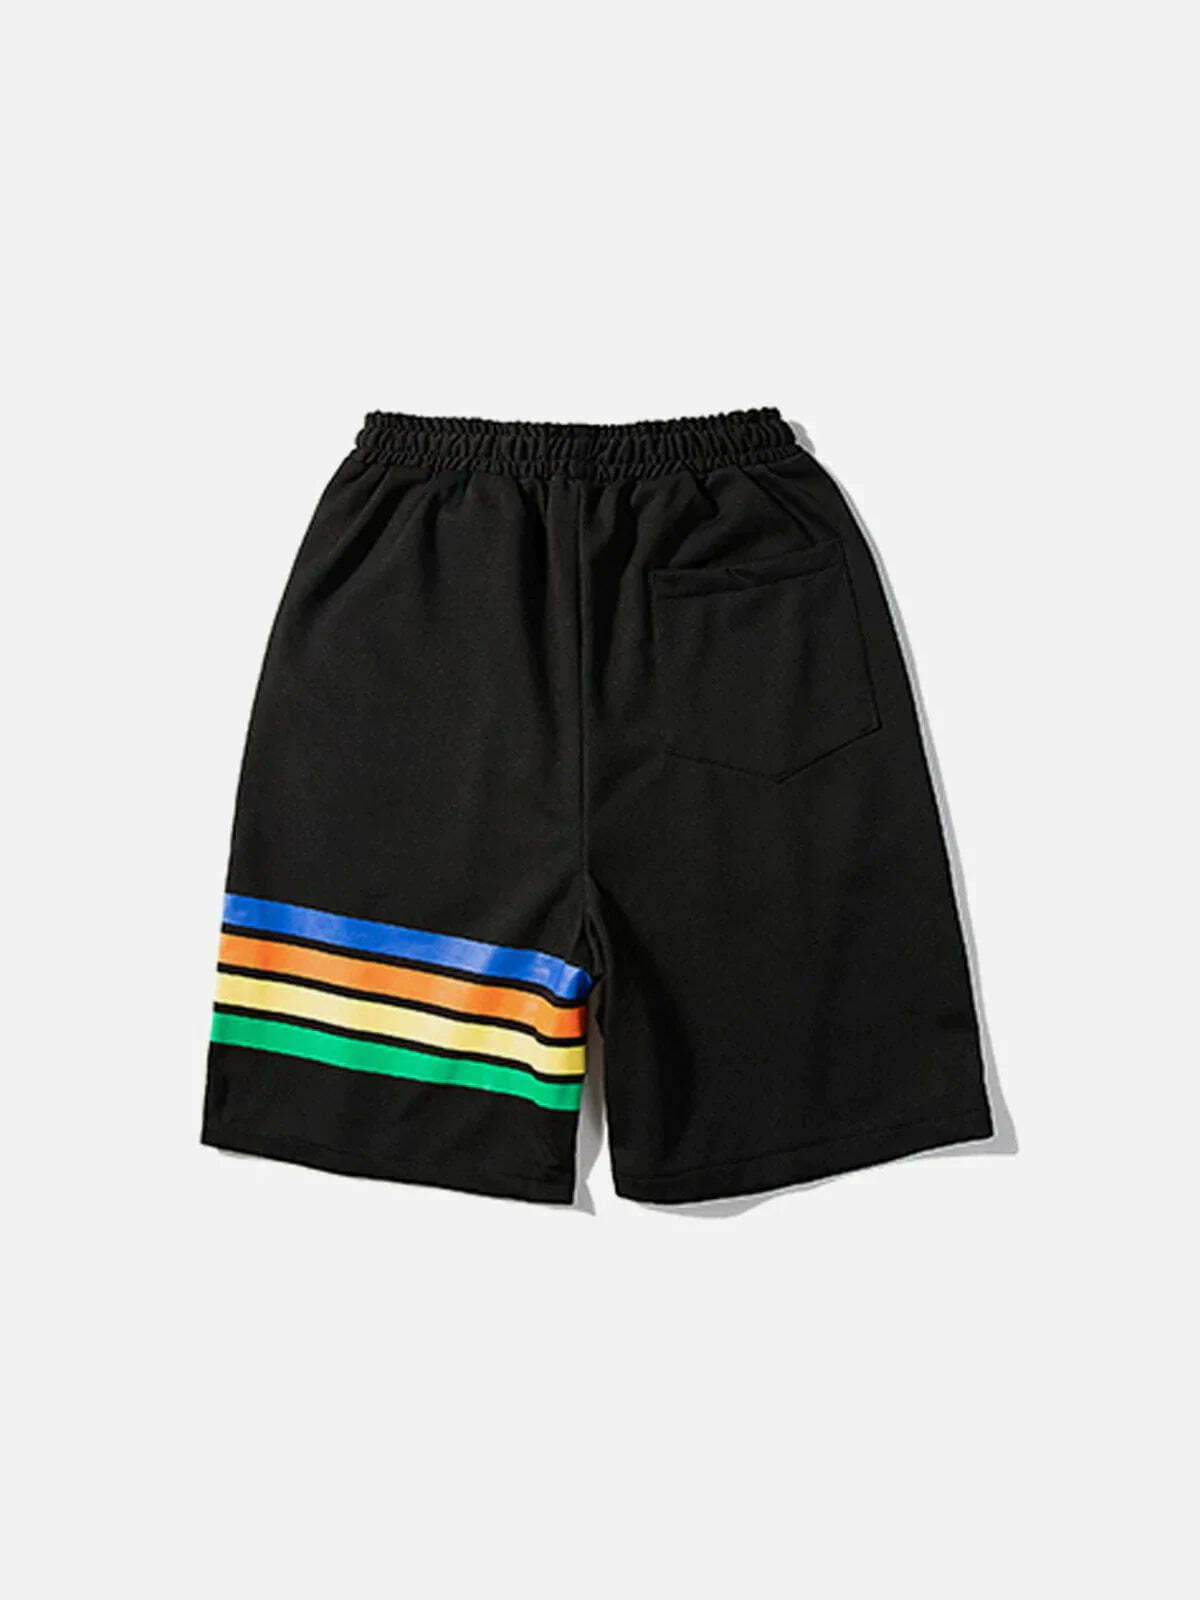 sleek striped drawstring shorts urban chic essential 4054